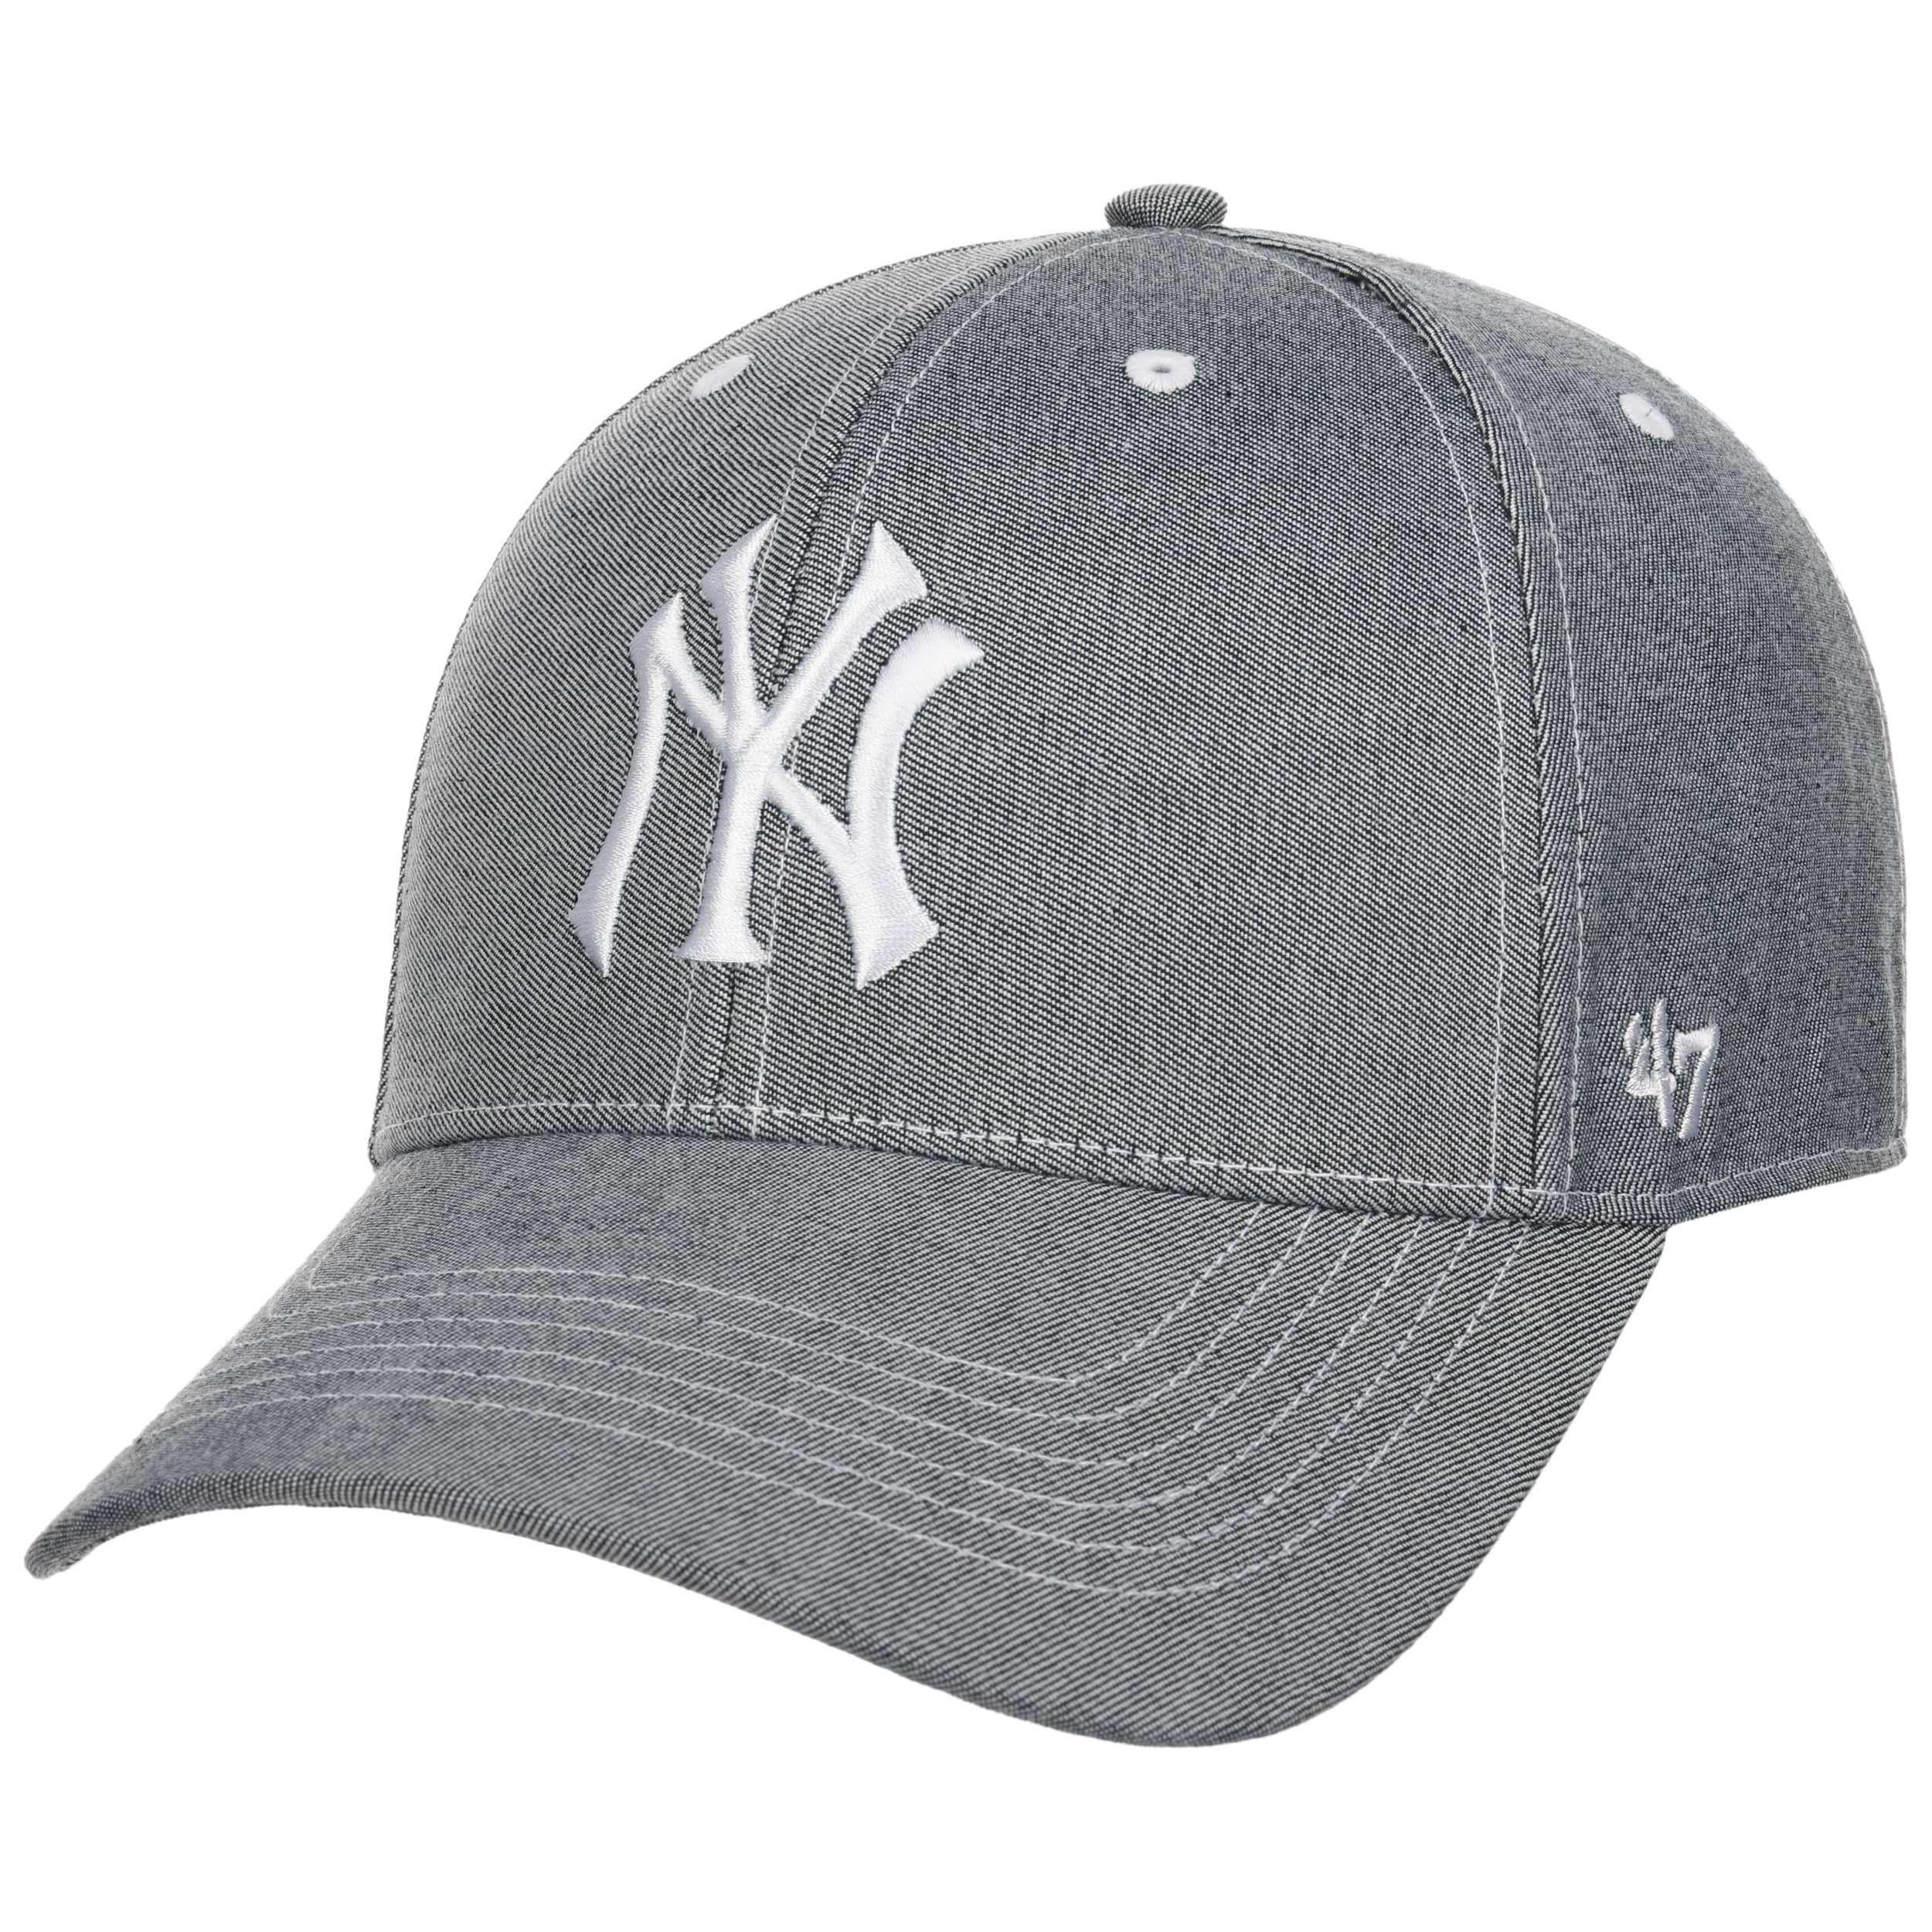 New Era MLB '47 Brand Clean Up Two Tone Adjustable Cap - Blue